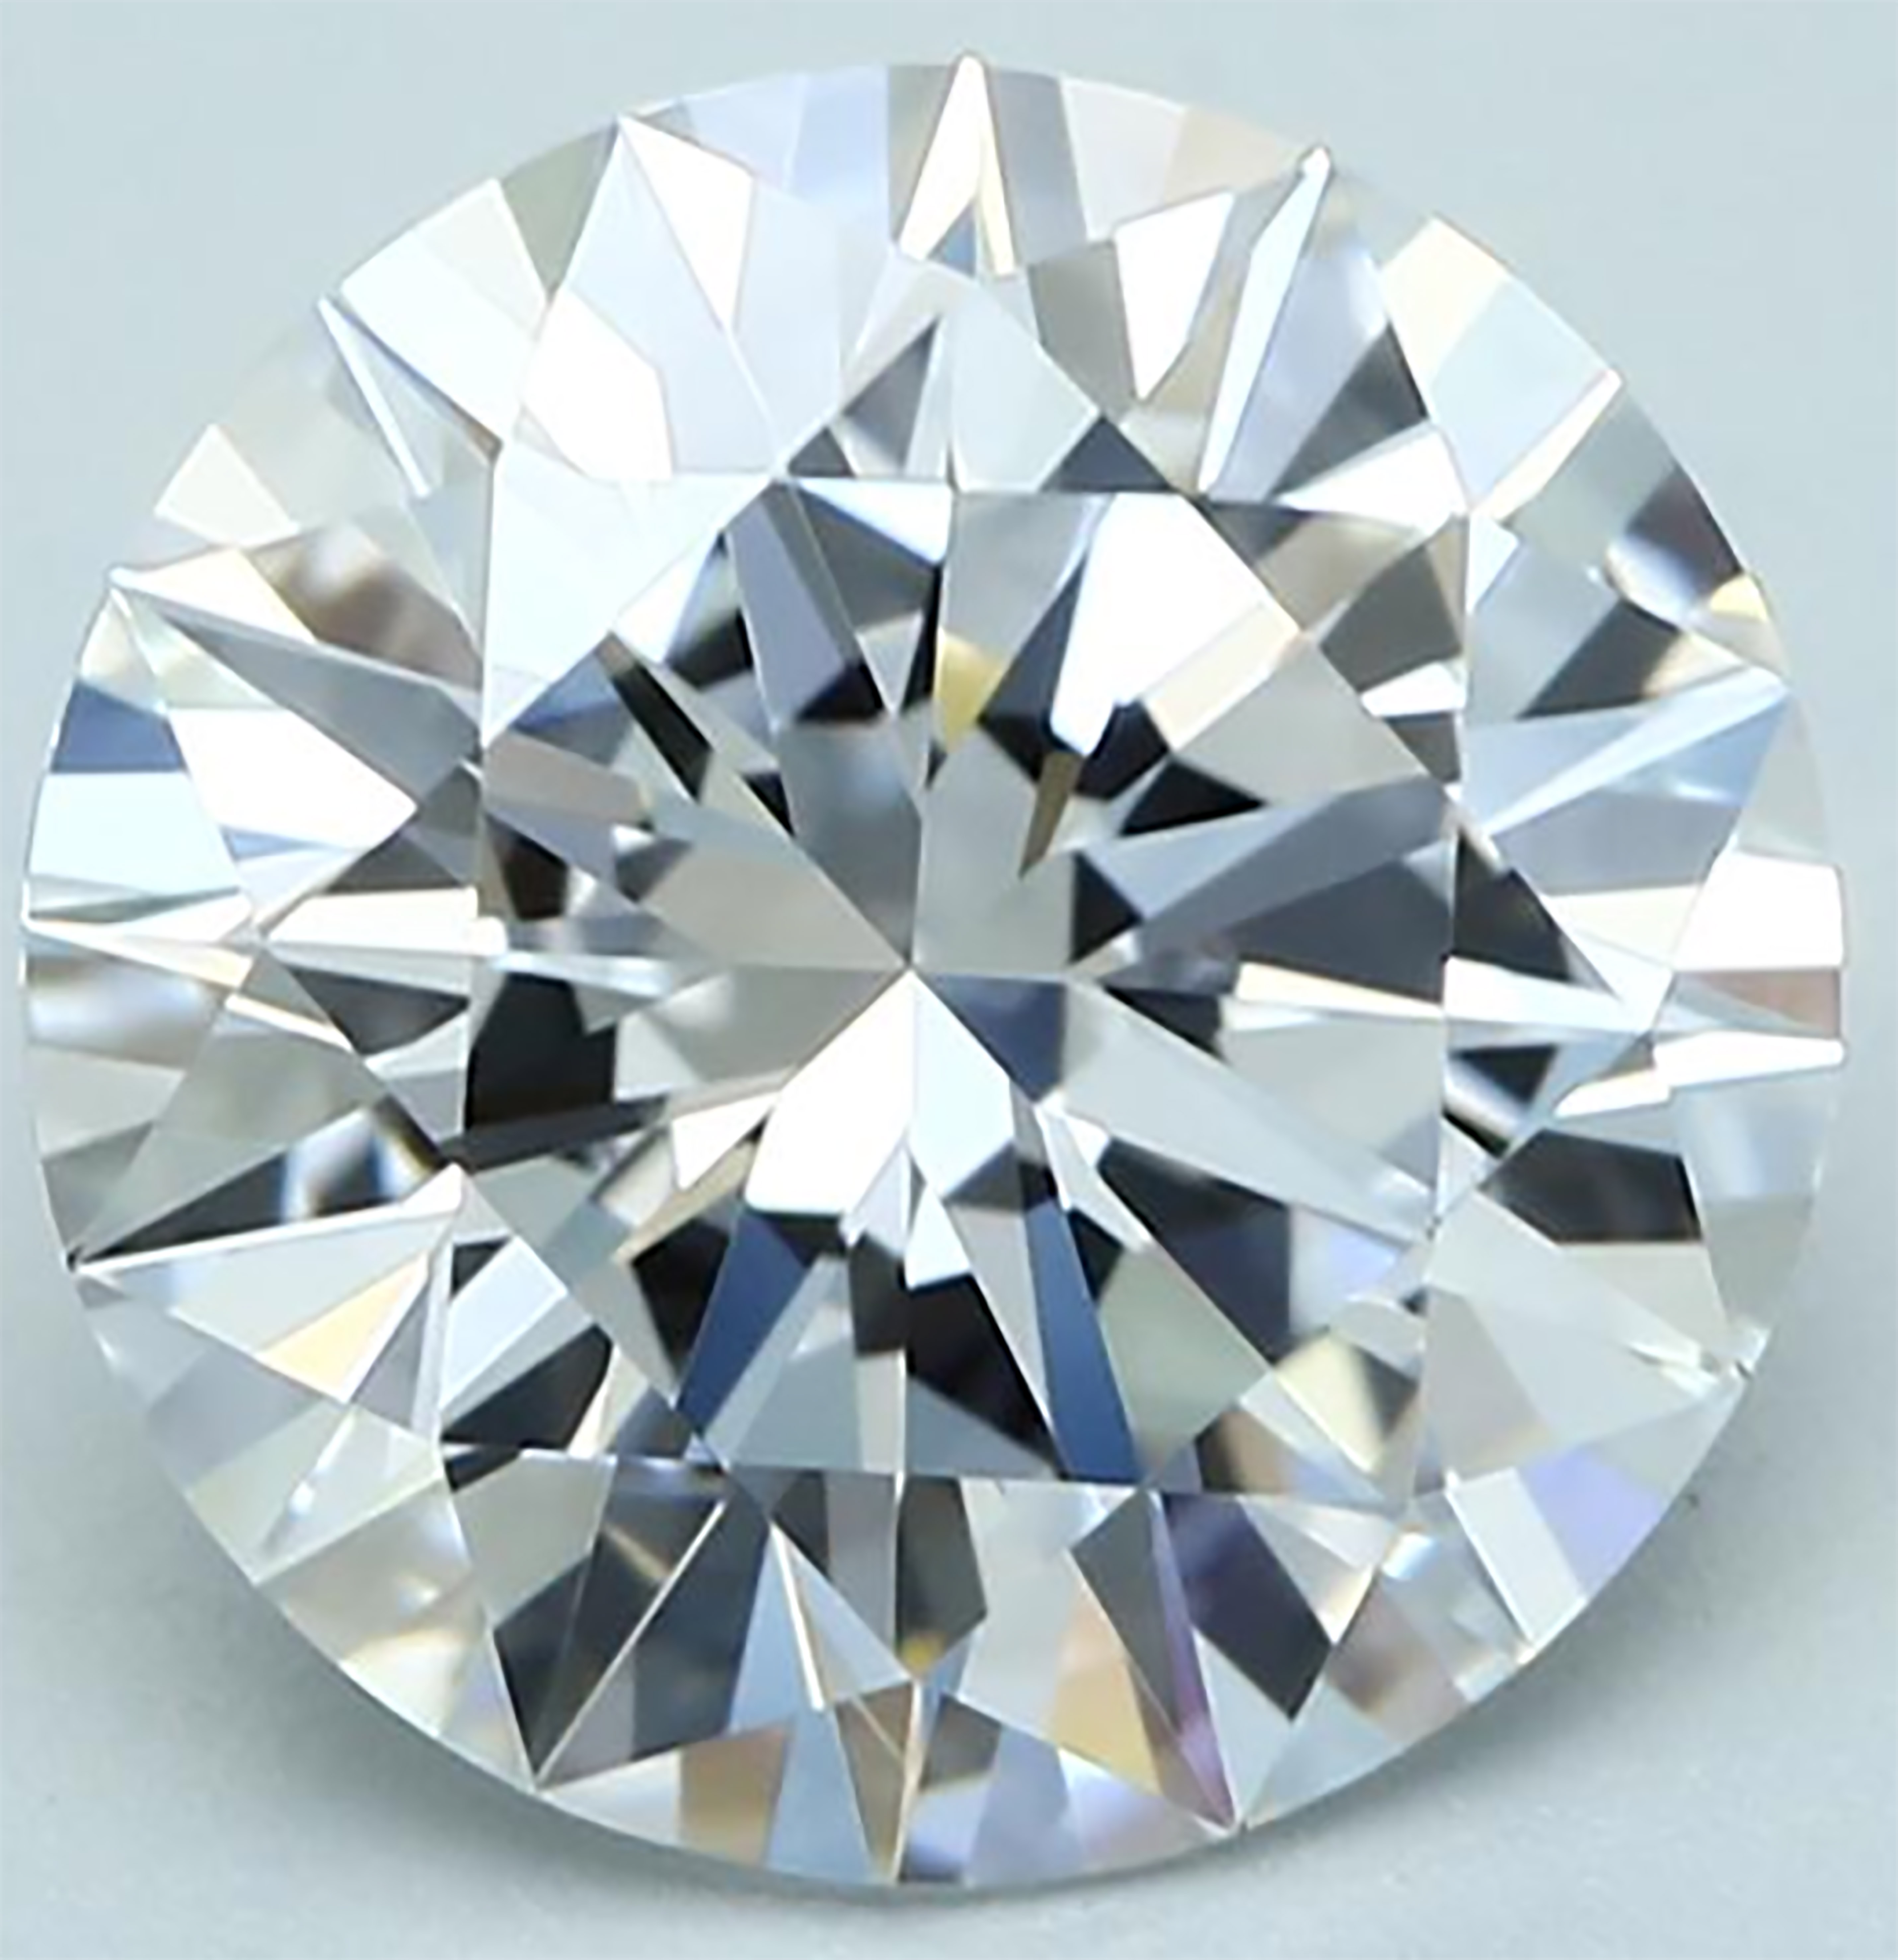 0.70 Carat, GIA Certified, Natural IF Diamond - Image 2 of 3